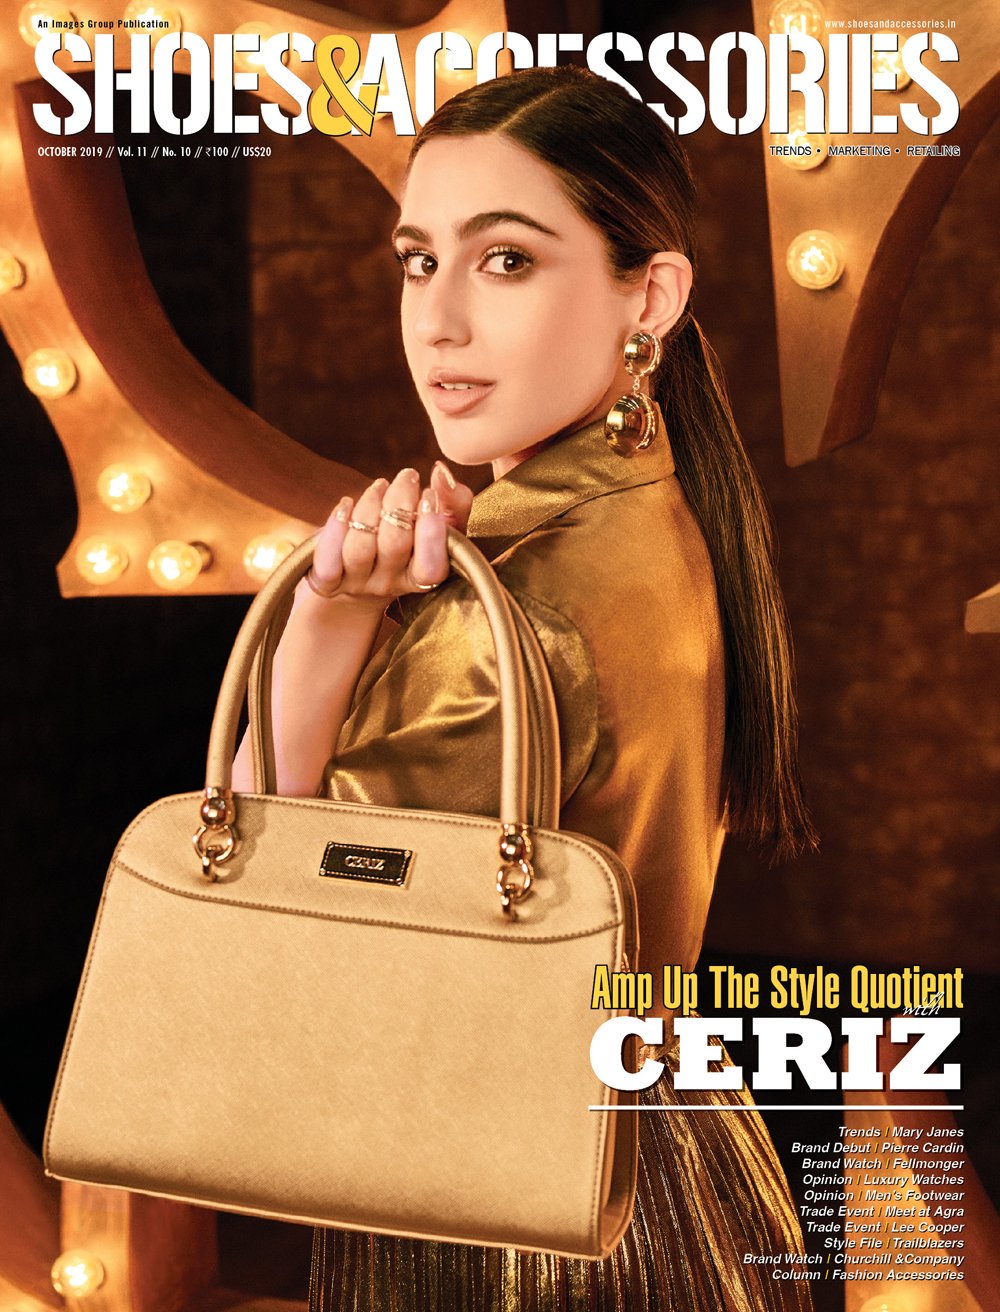 Sara Ali Khan luxury handbag worth T** lakhs